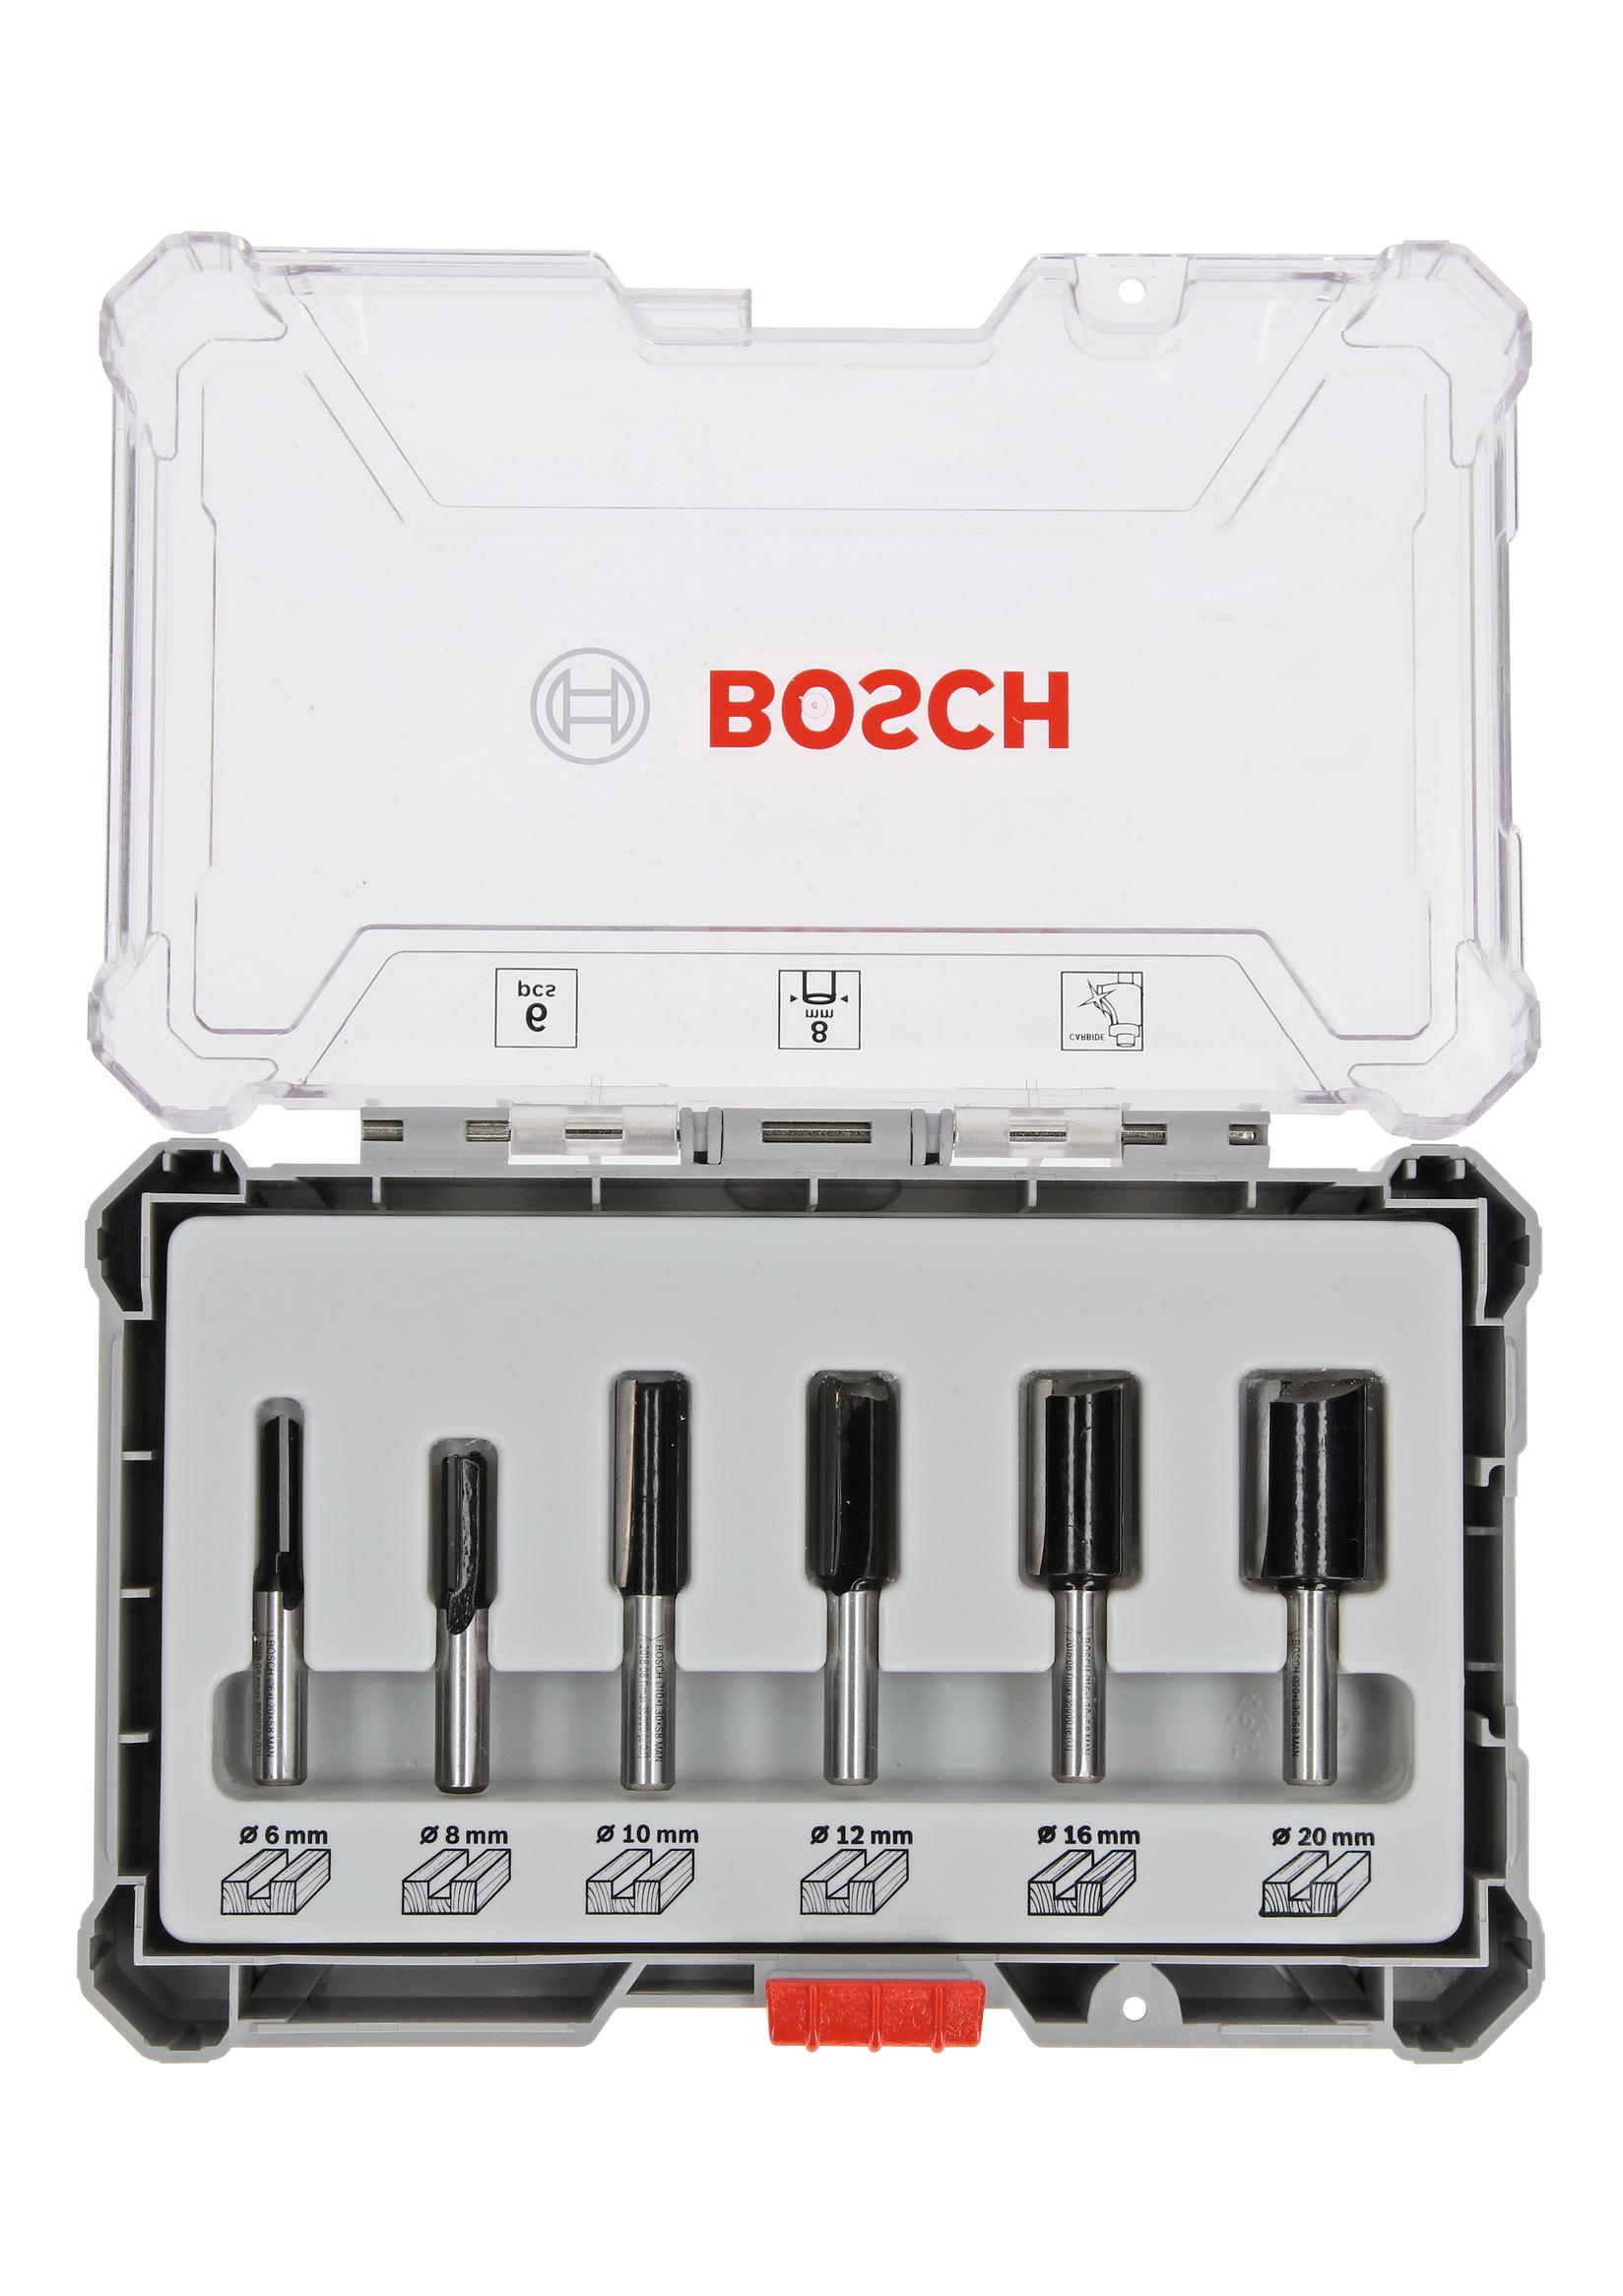 Selected image for Bosch Komplet ravnih glodala, 6 komada, držač od 8 mm 2607017466, 6-piece Straight Router Bit Set.